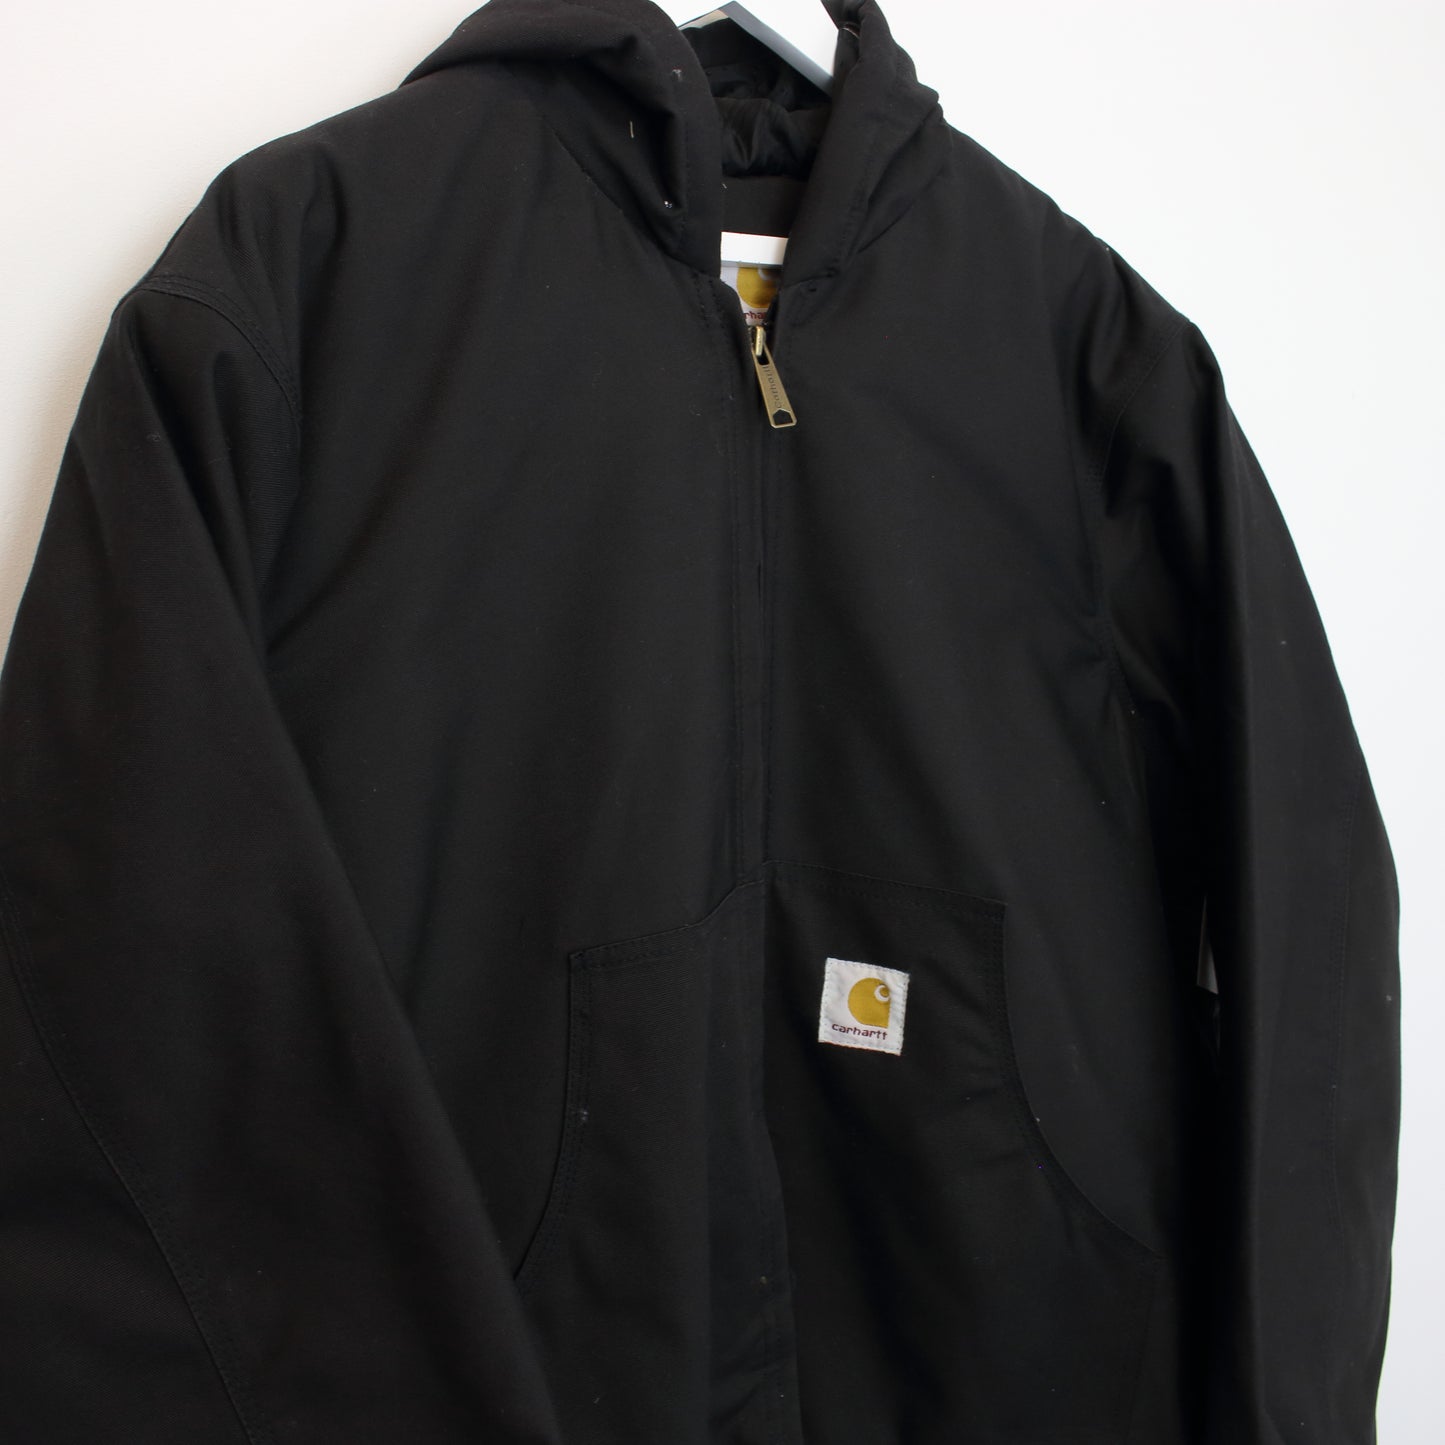 Vintage Carhartt active style reworked jacket in black best fits M